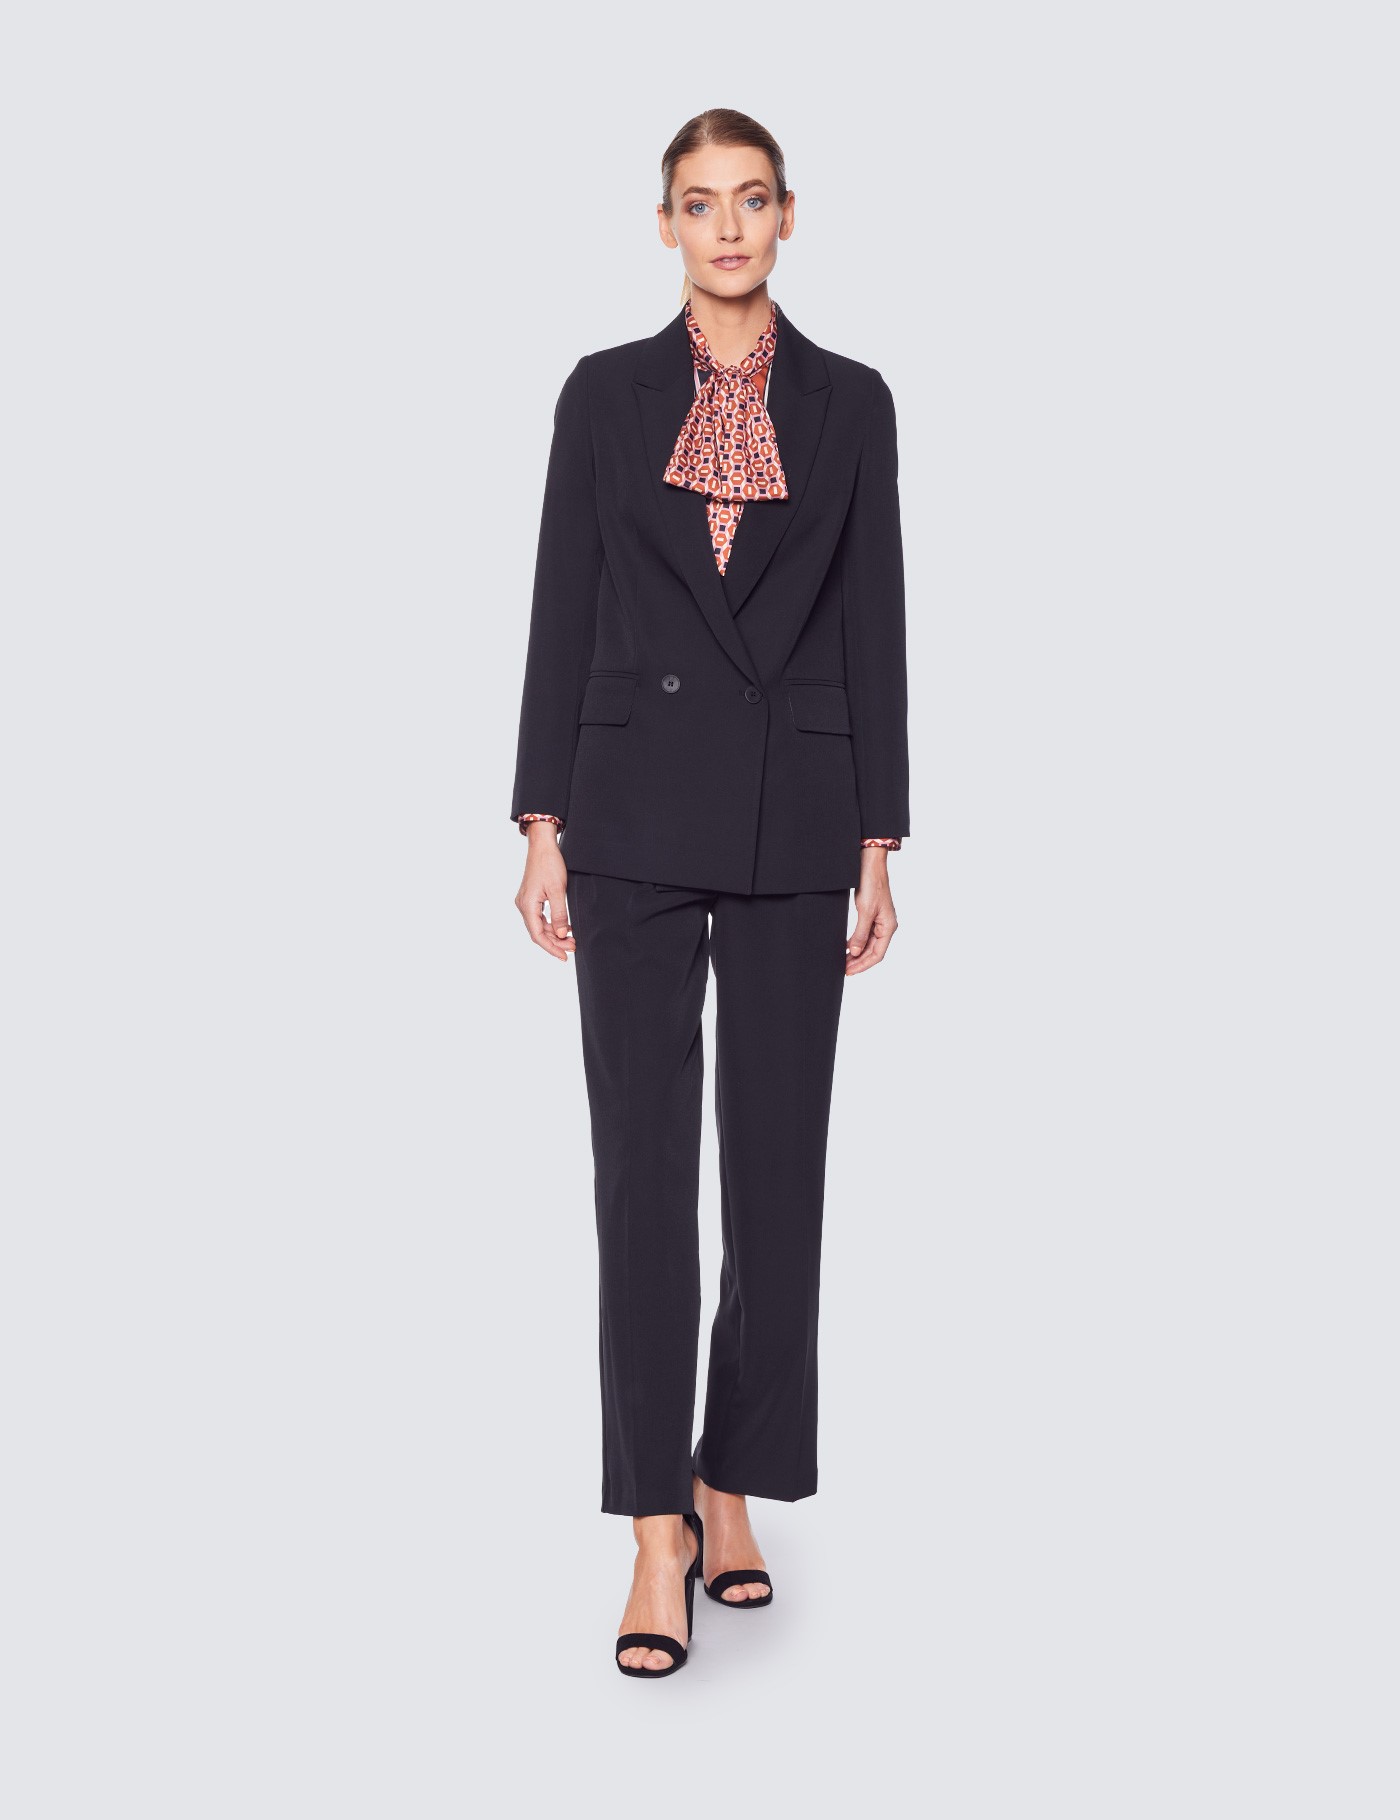 Women 2 Piece Bespoke Pantsuit Black Velvet Blazer Suit Set Double